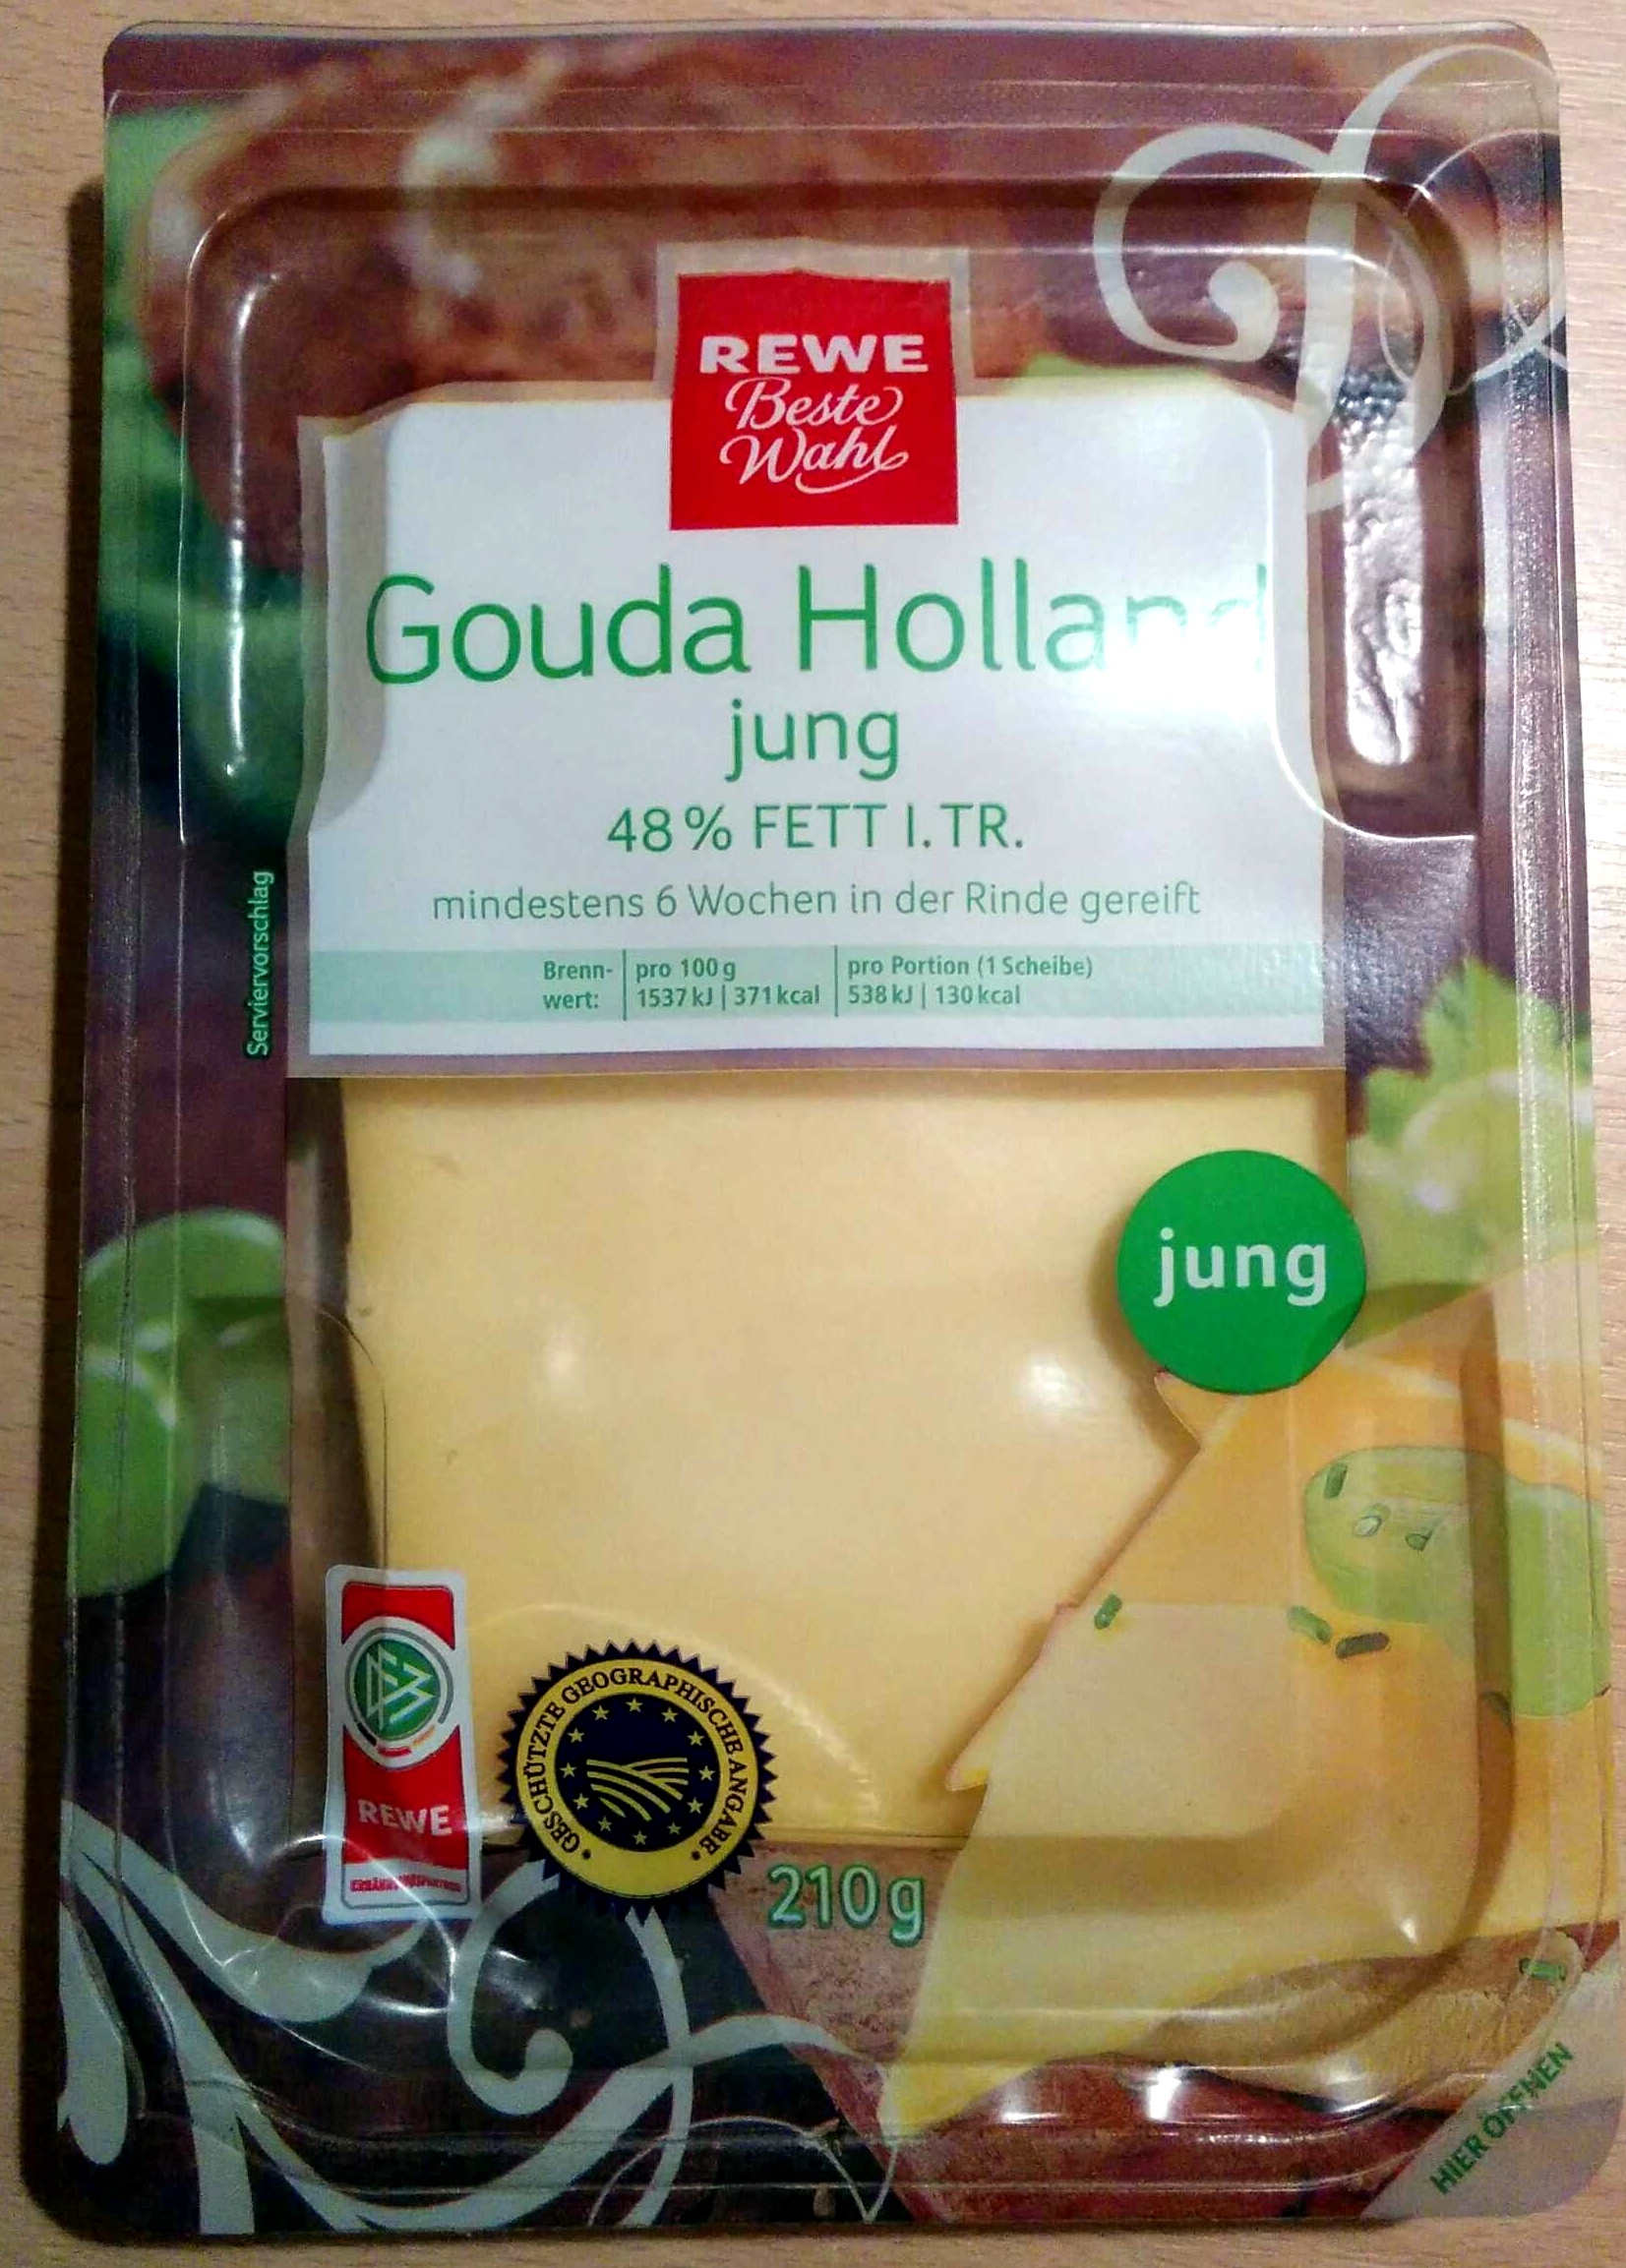 Gouda Holland jung - Product - de